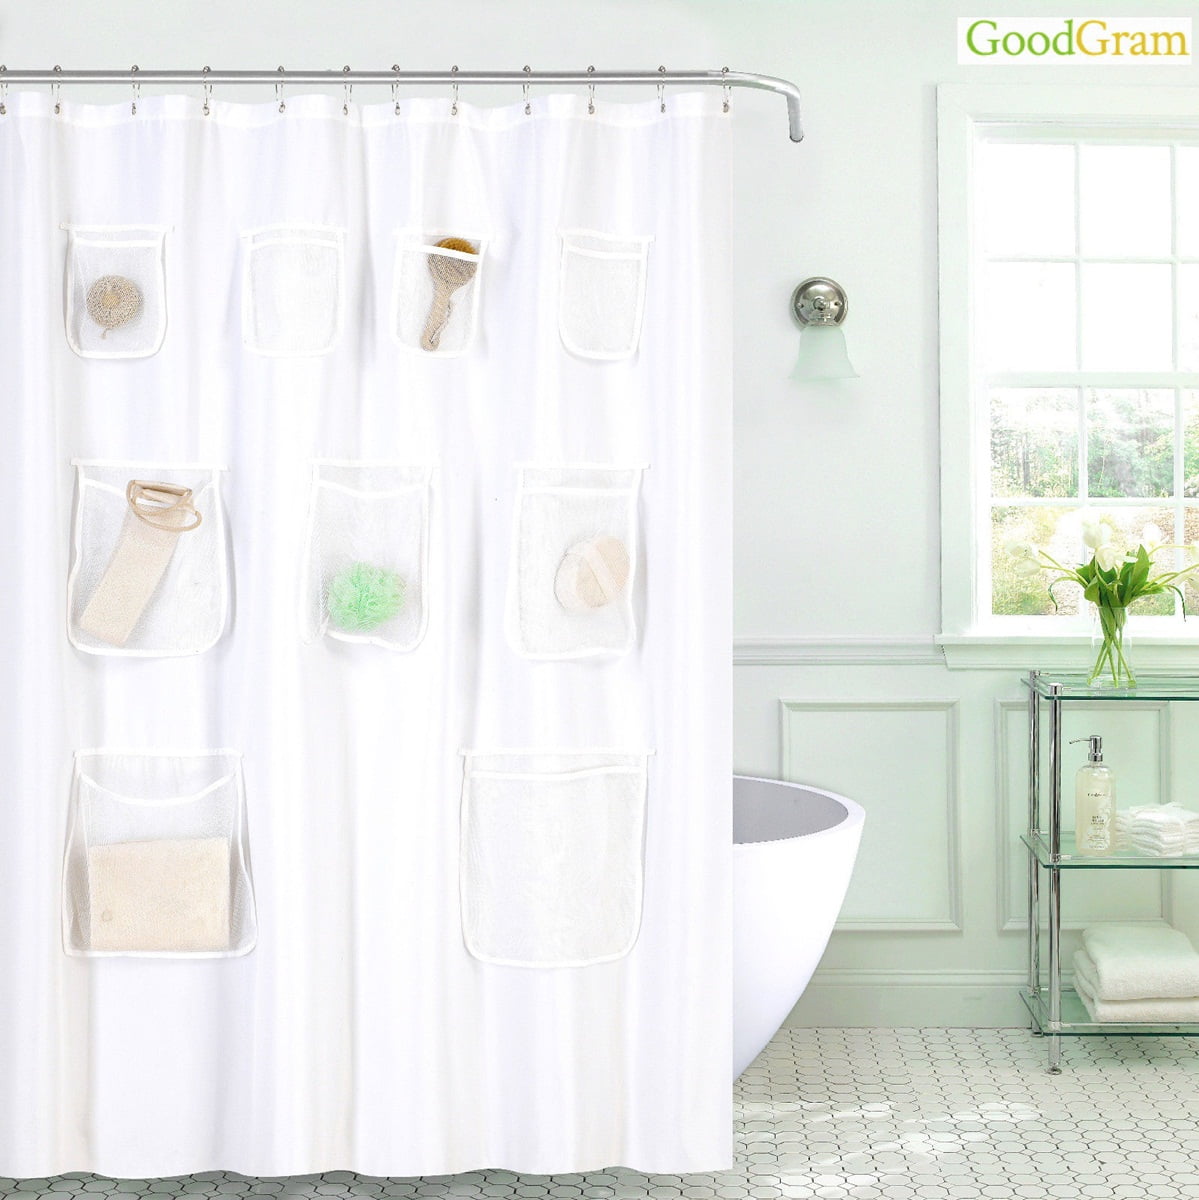 Shower Curtain Bathroom Organizer 9 Mesh Pockets for Easy Storage. 